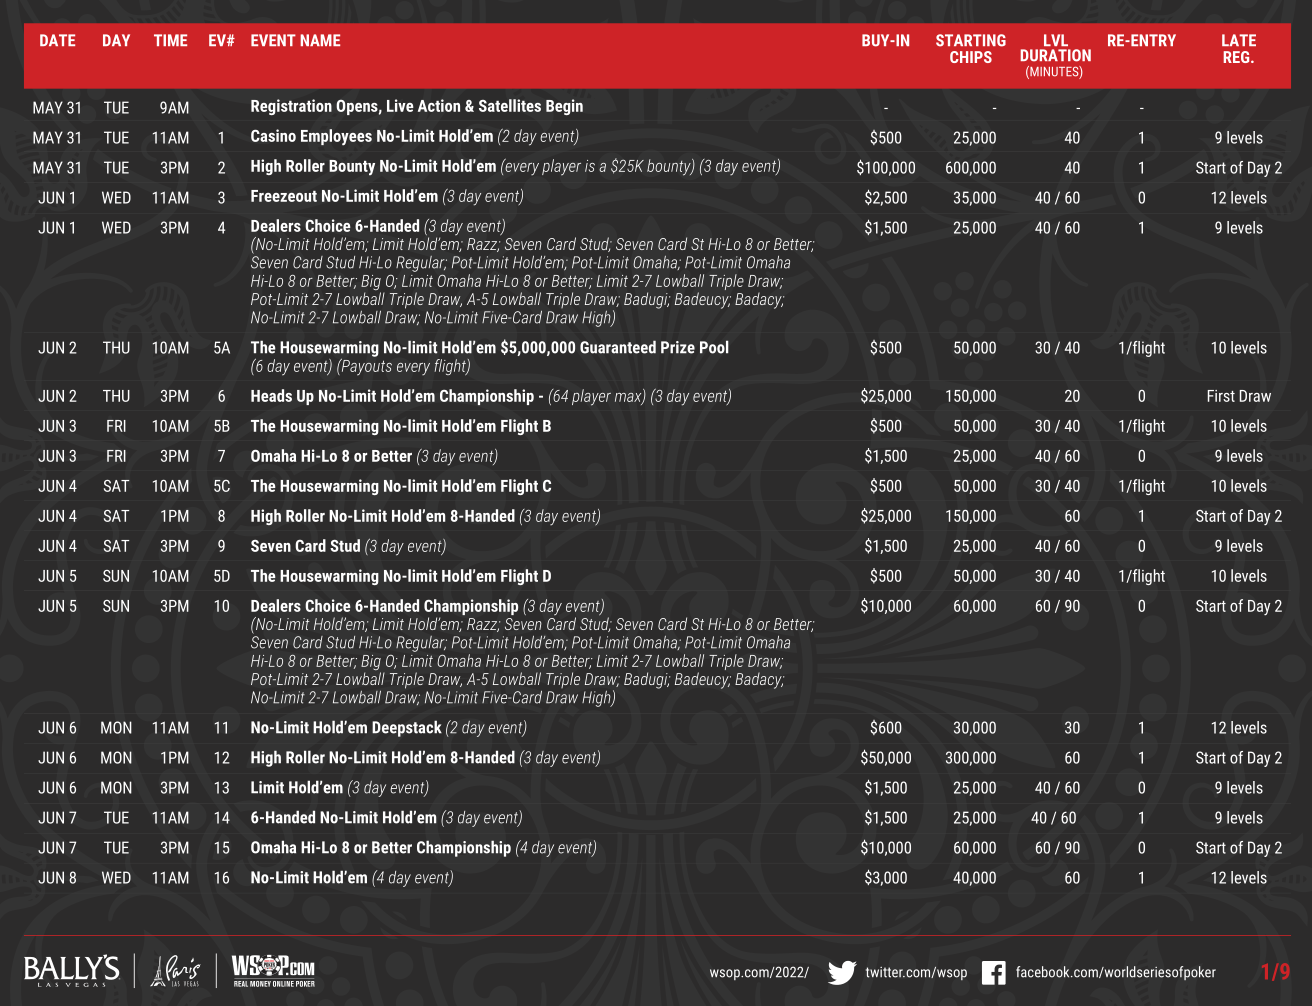 WSOP 2022 Schedule Revealed 88 Live Bracelet Events, 21 Online